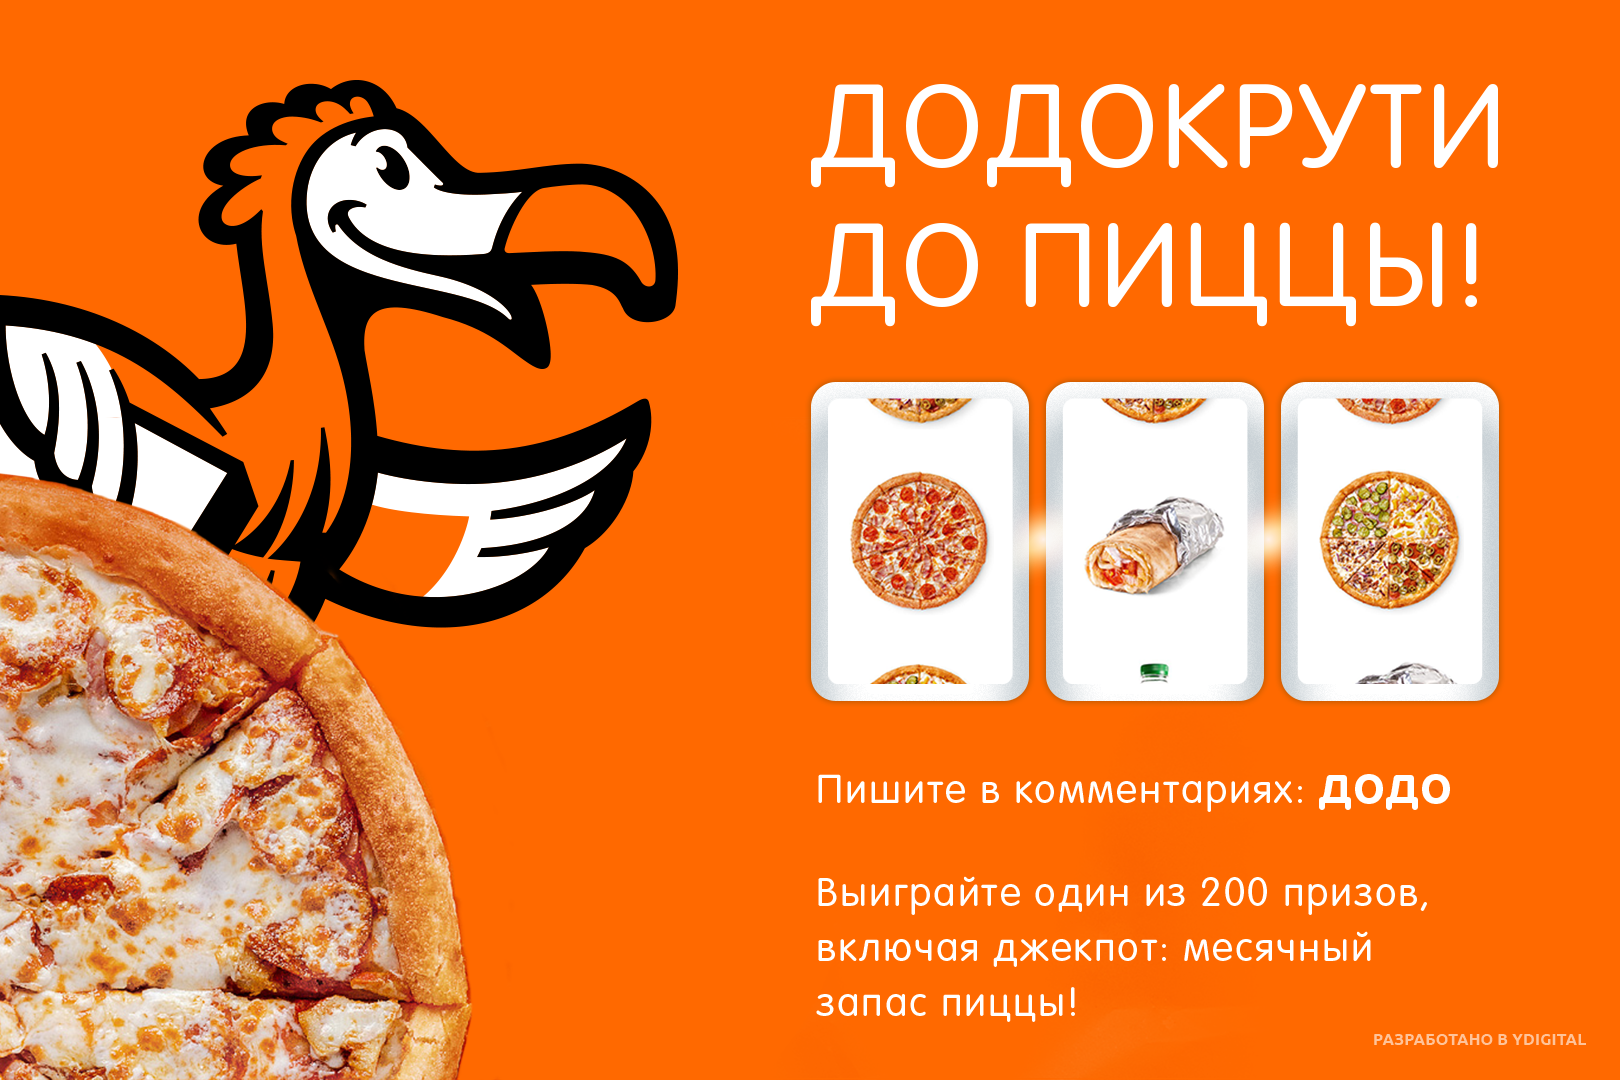 Додо пицца реклама. Рекламная листовка Додо пицца. Додо пицца картинки. Баннеры рекламные Додо пиццерии.